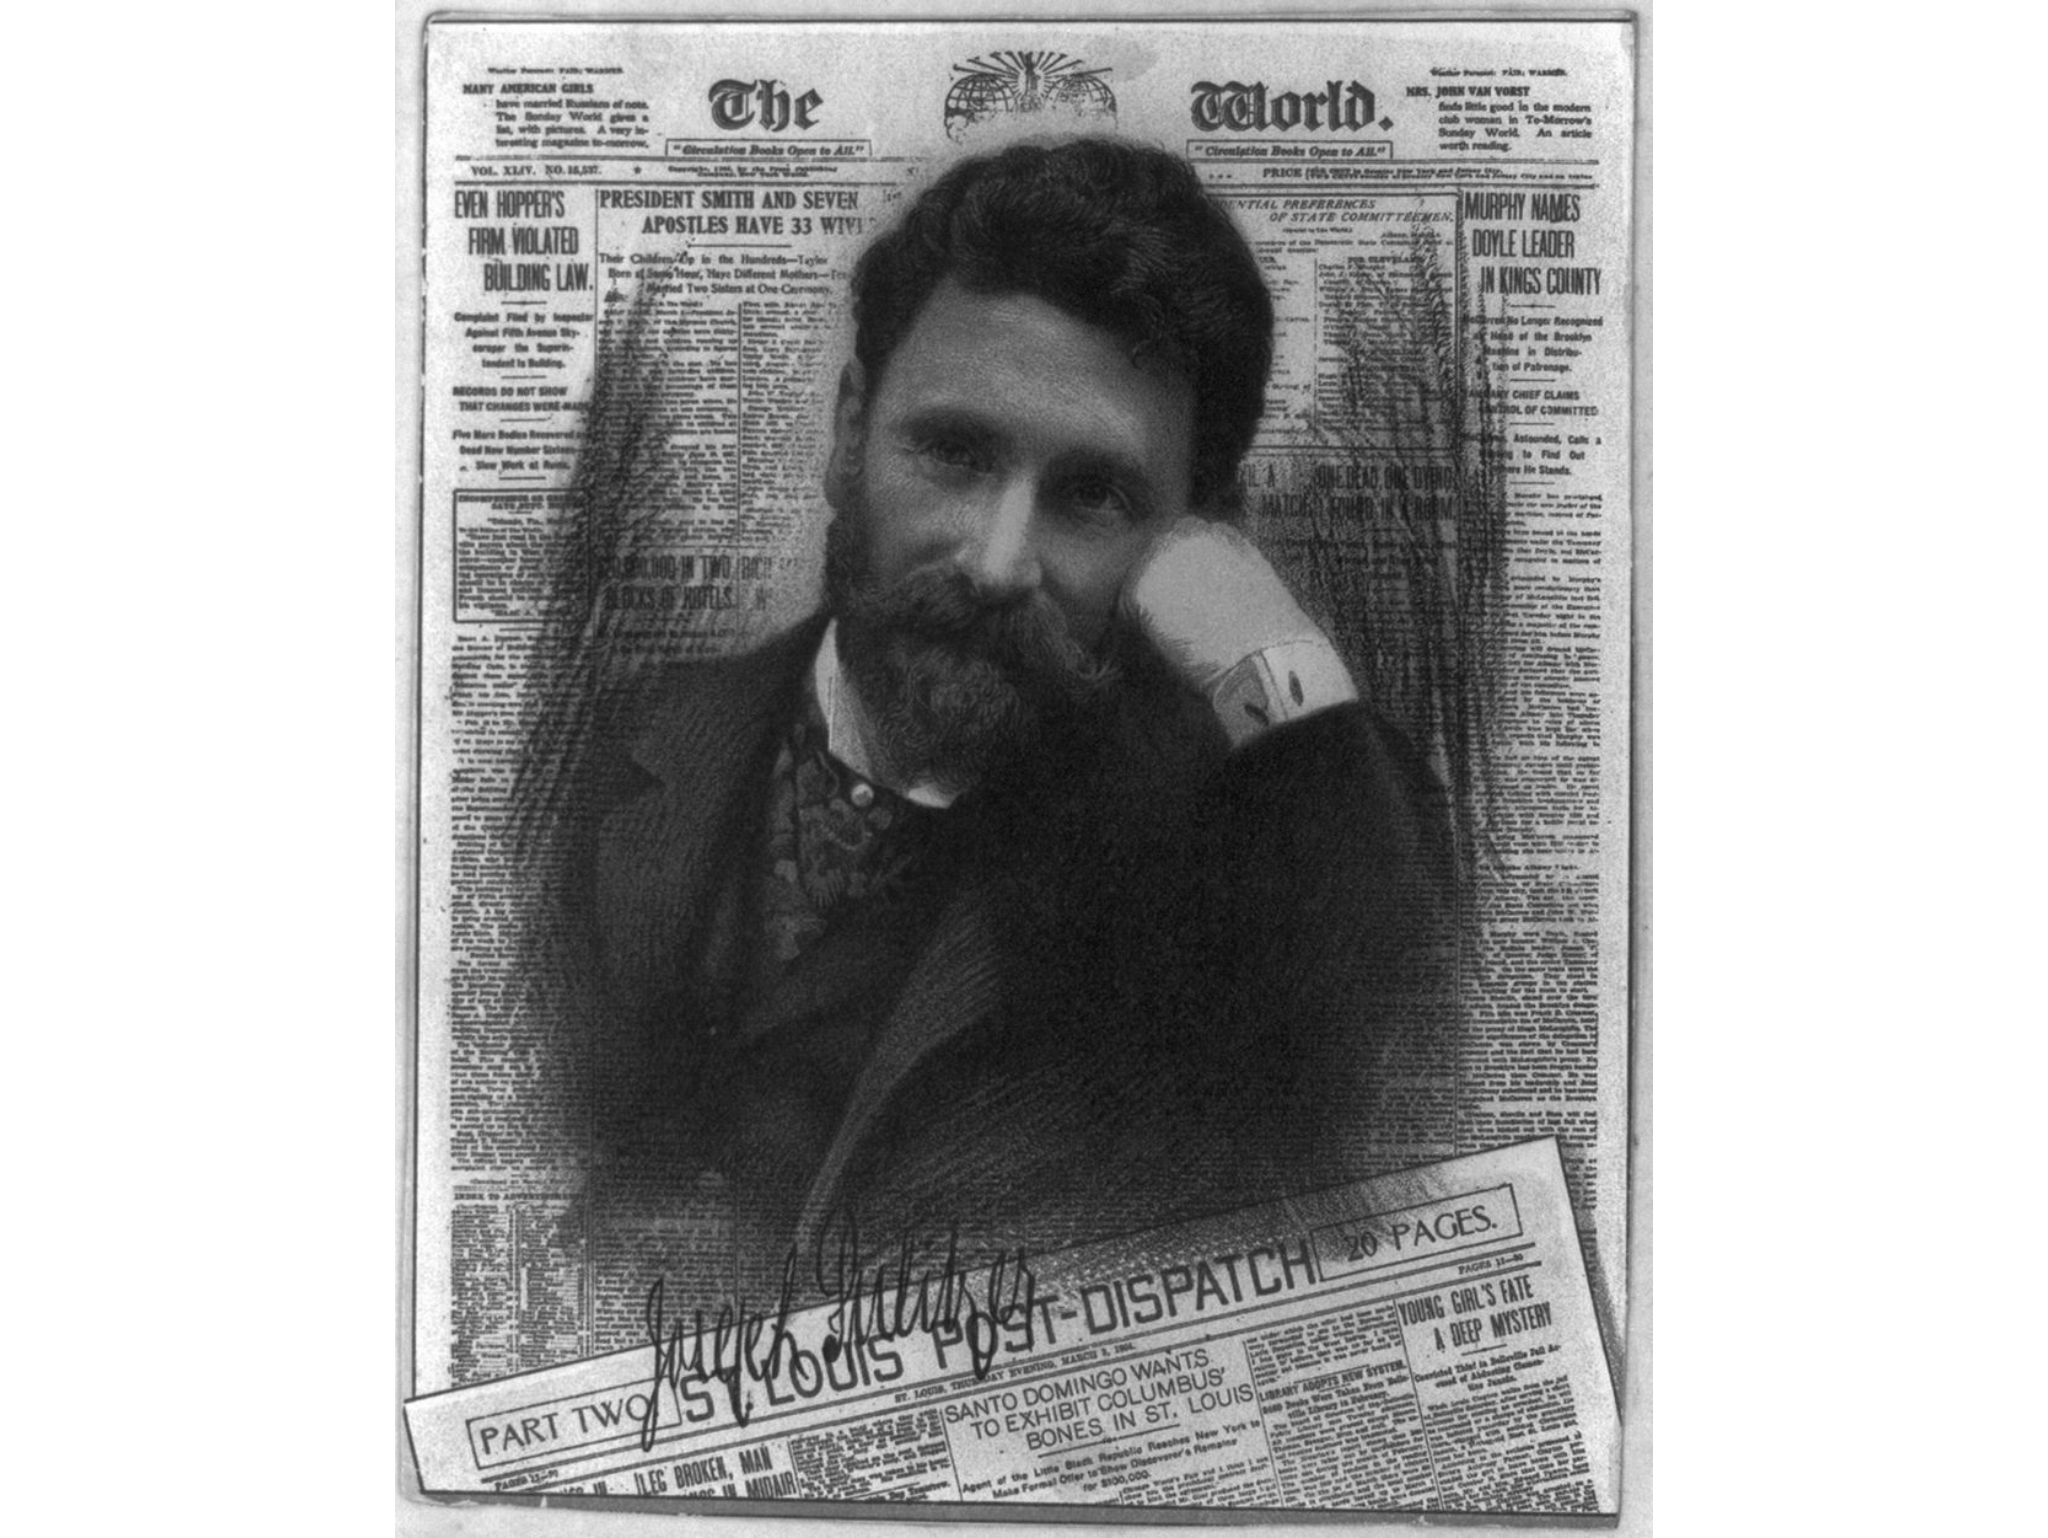 Joseph Pulitzer (1847 – 1911): The Media Magnate Who Revolutionized Journalism